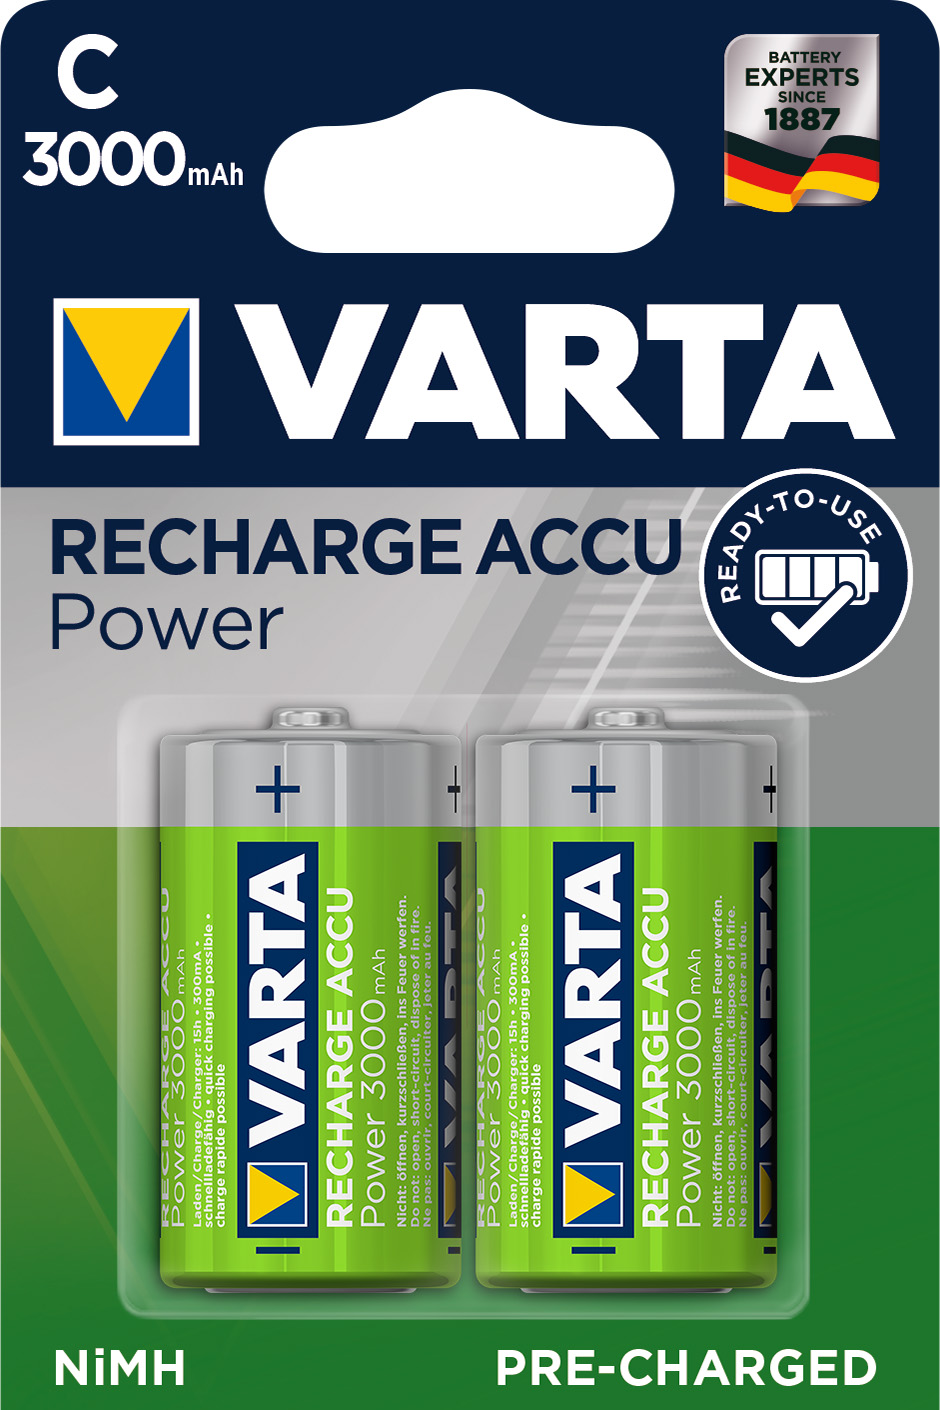 VARTA Batteries 56714101402 HR14 / C blister de 2